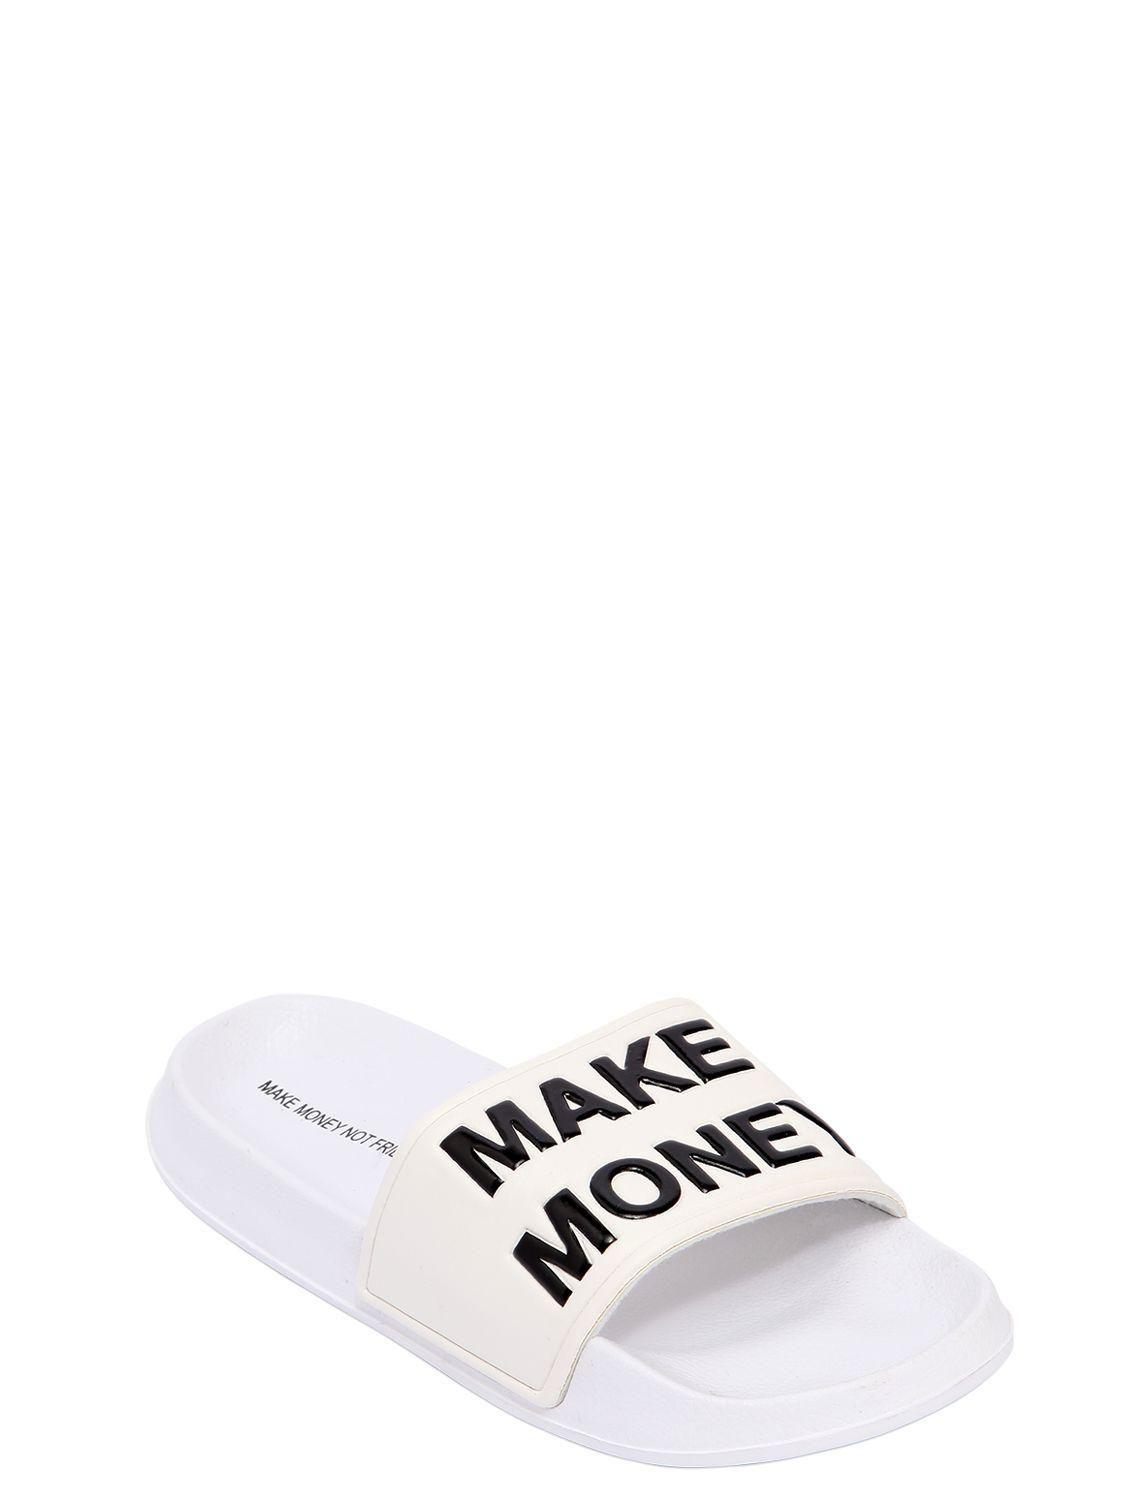 Black and White Friends Logo - Make Money Not Friends Logo Slide Sandals in White